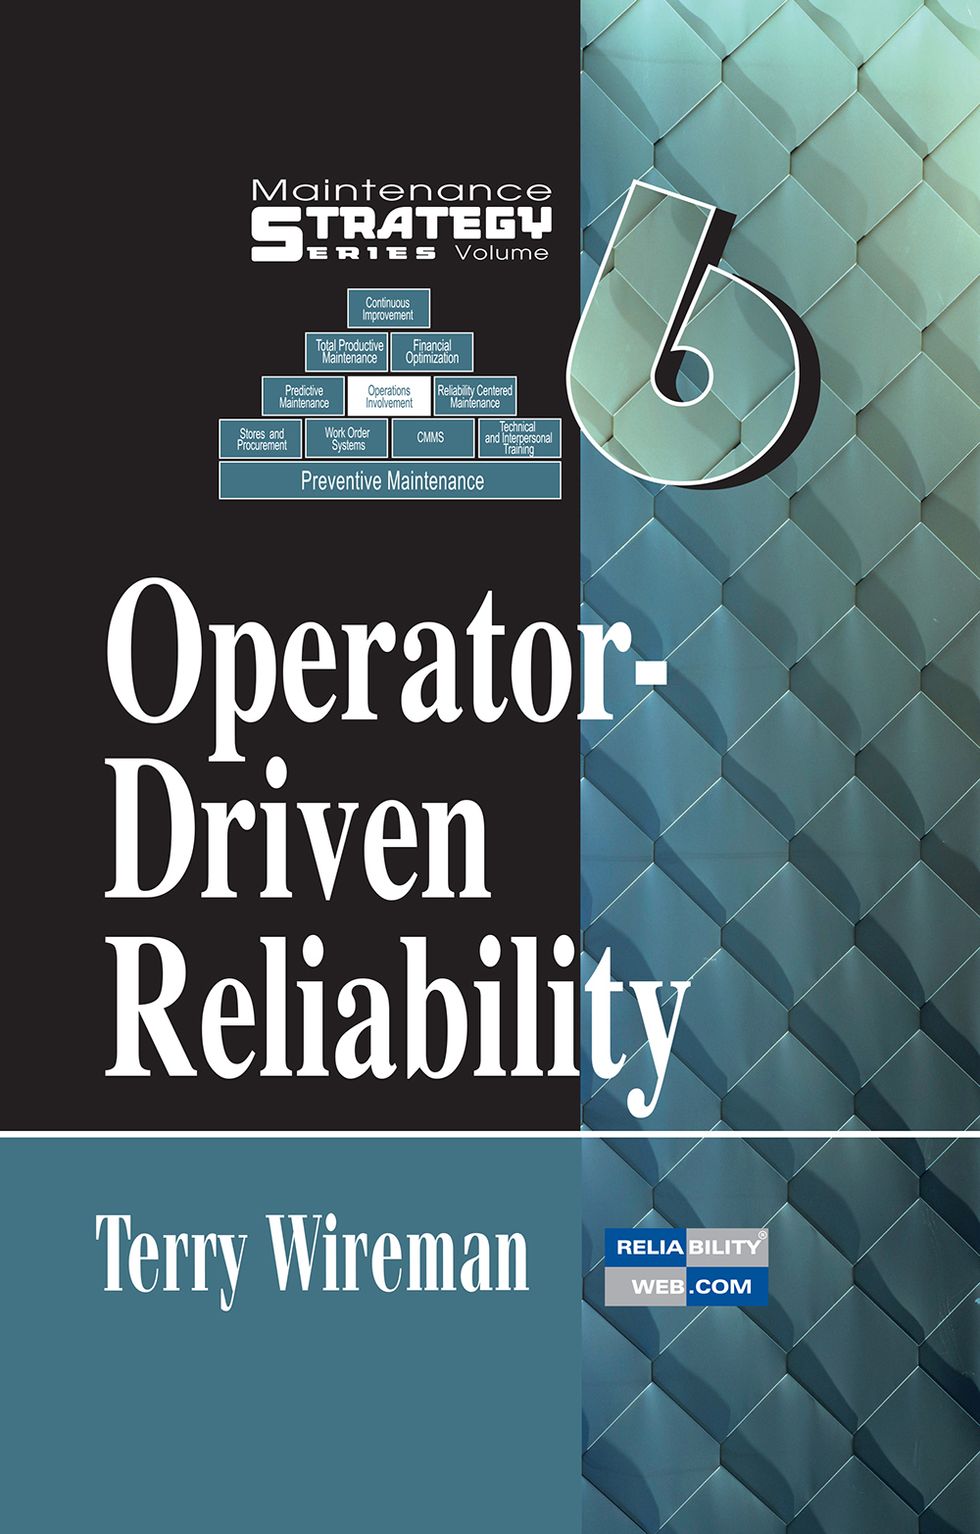  Maintenance Strategy Series Volume 6 - Operator-Driven Reliability 